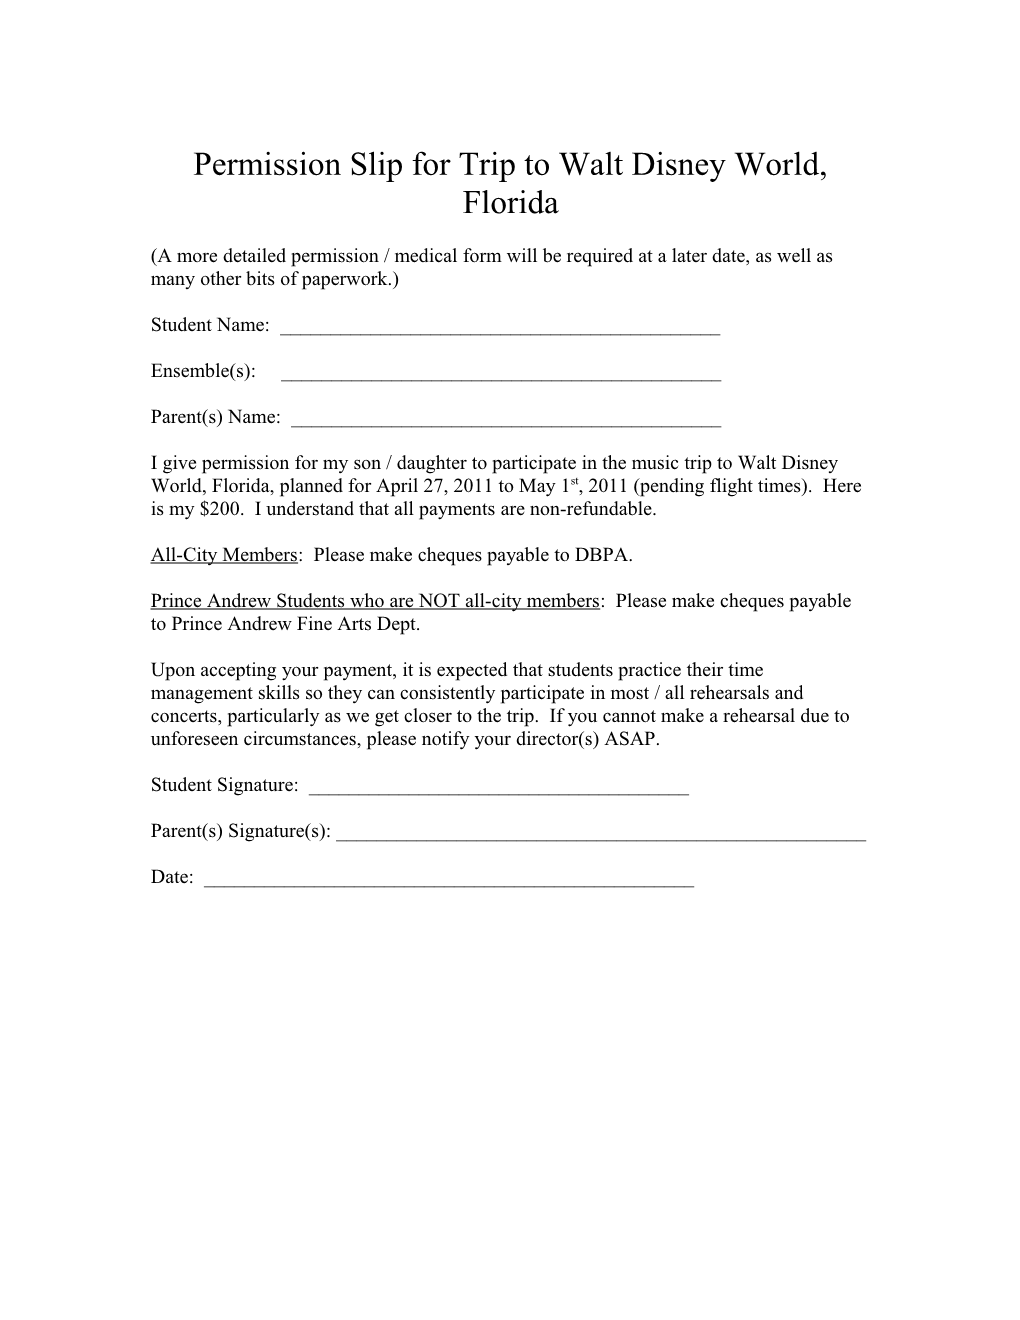 Permission Slip for Trip to Walt Disney World, Florida